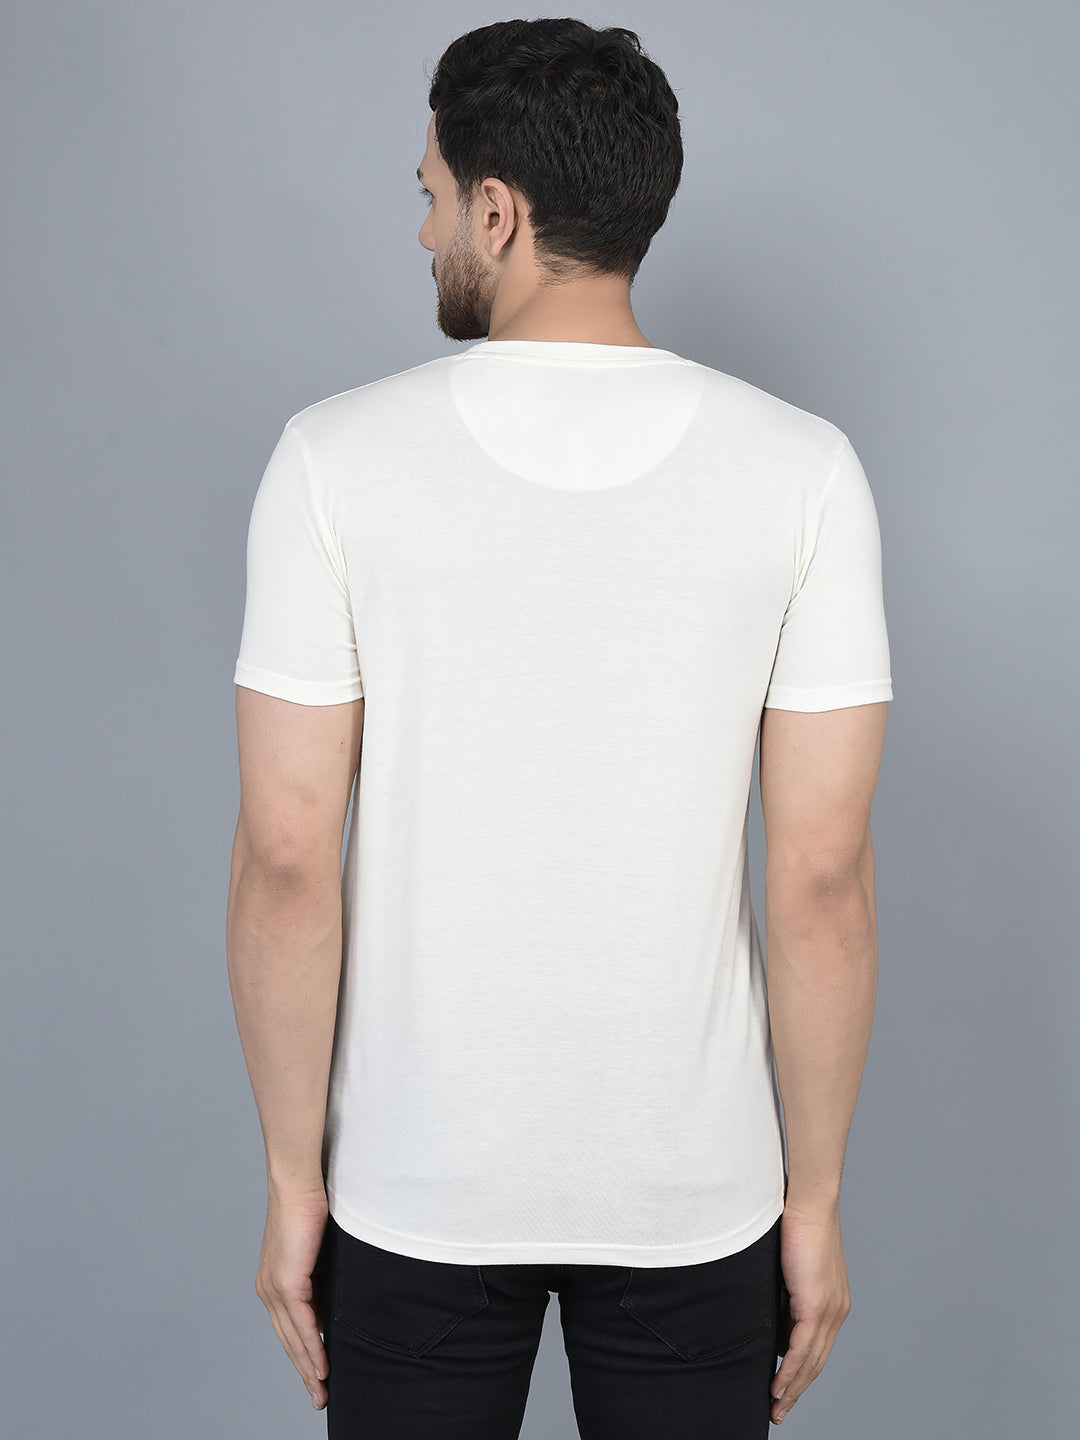 Cobb Off White Printed Round Neck T-Shirt